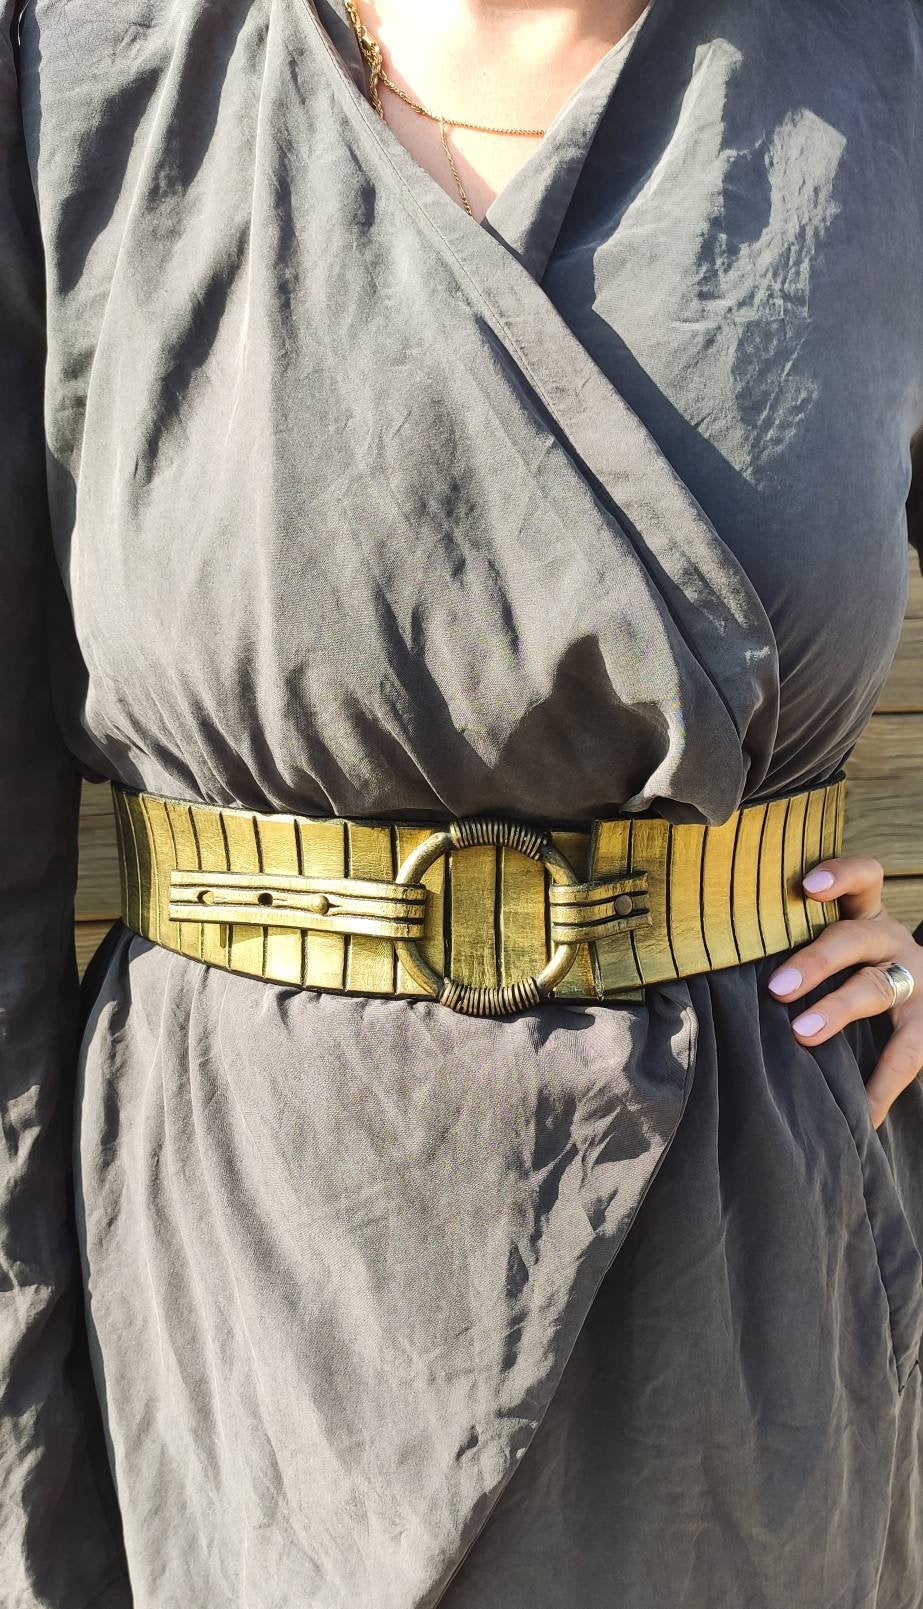 Plus Size Two Buckle Chain Waist Belt-Gold – Curvy Sense